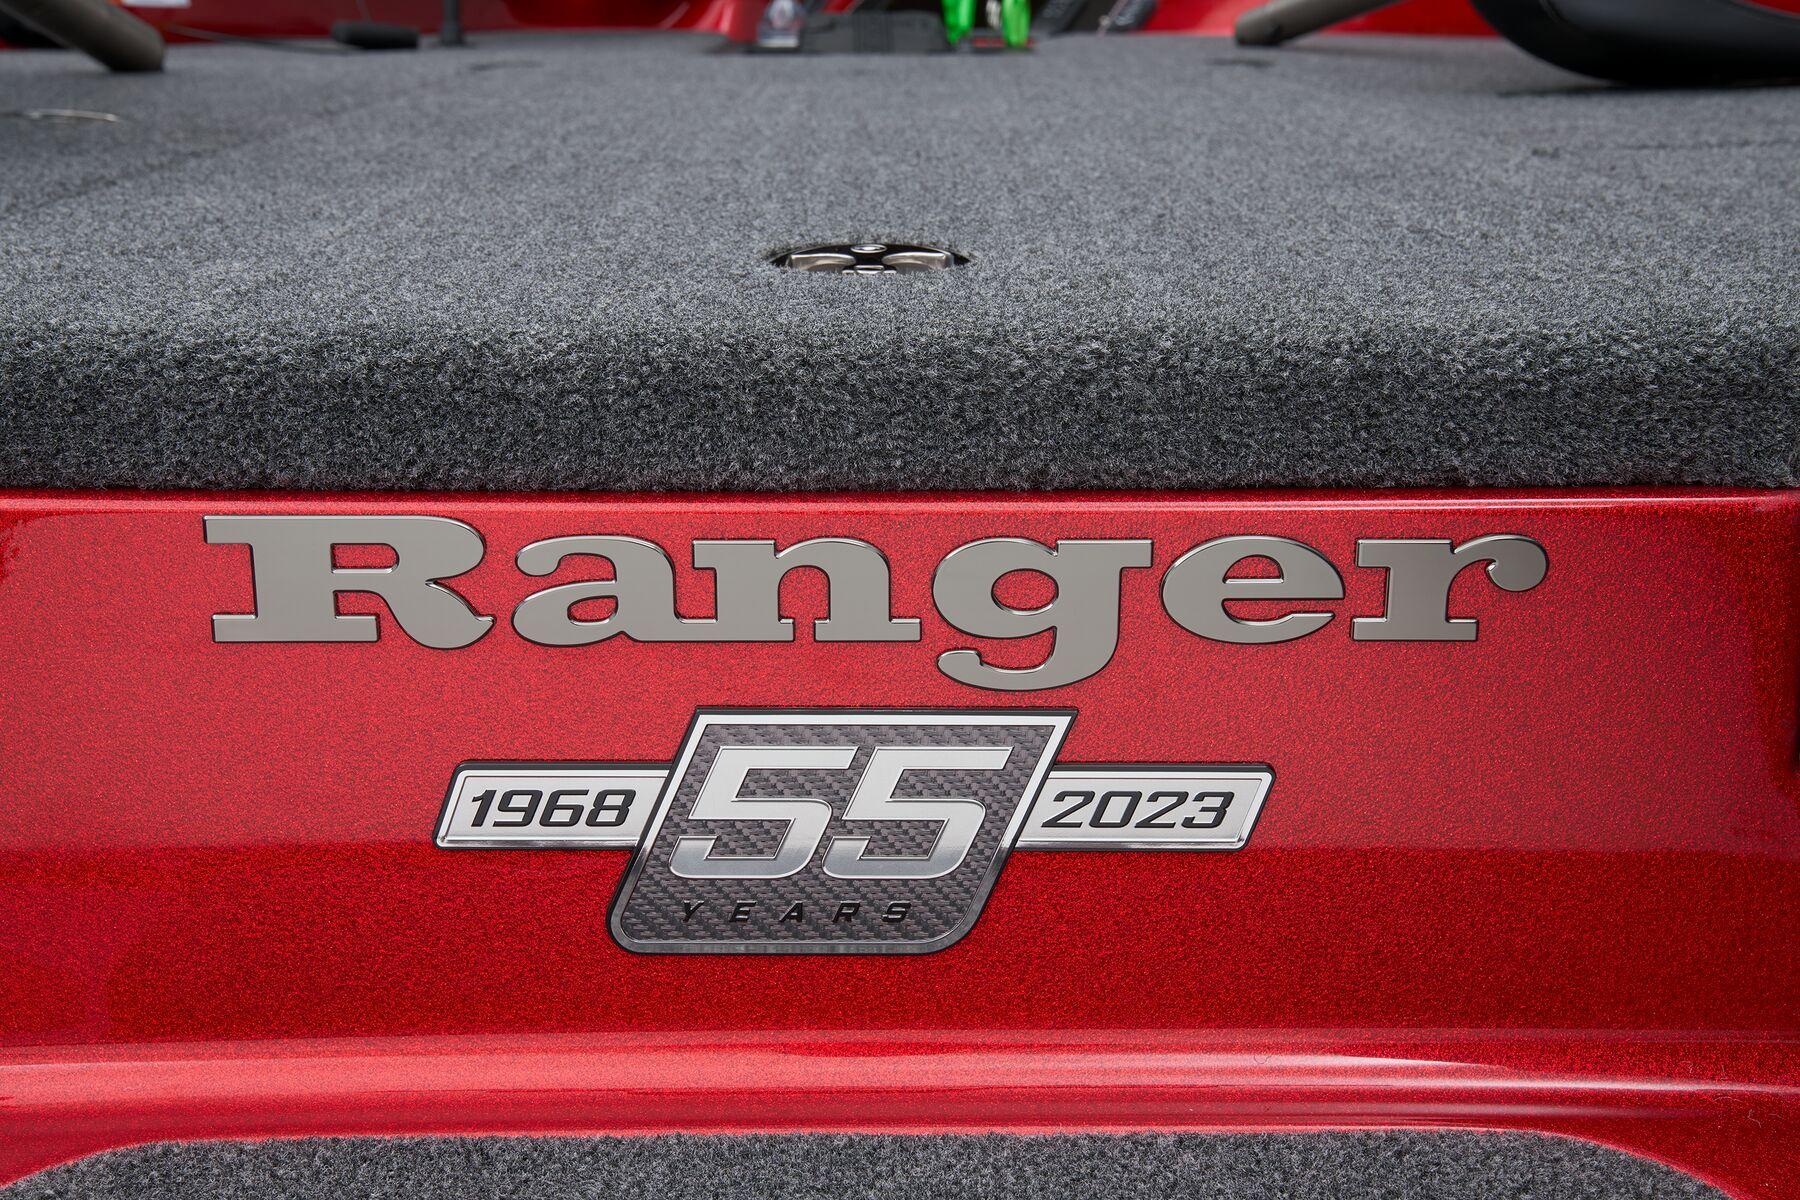 2023 Ranger Z519 Ranger Cup Equipped